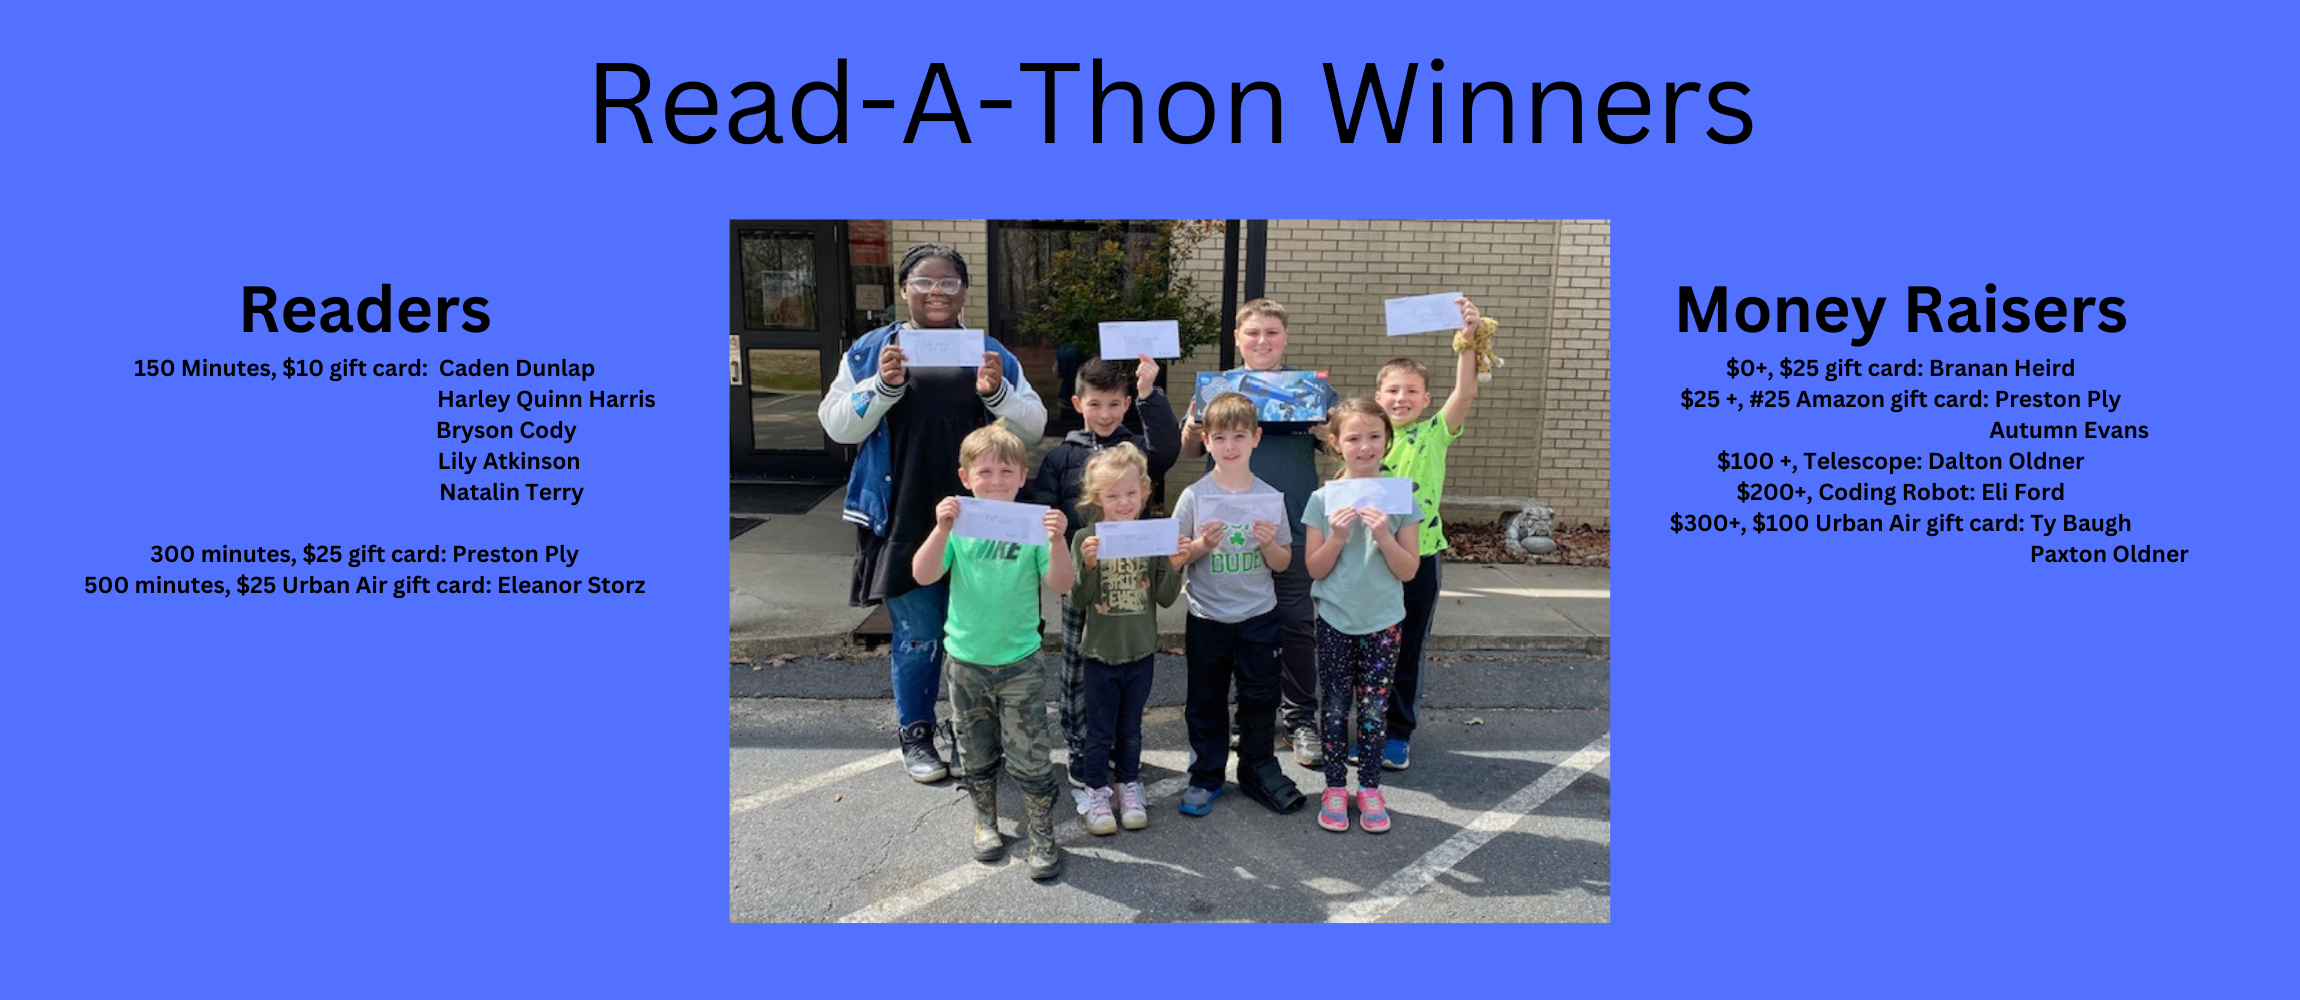 Read-A-Thon Winners